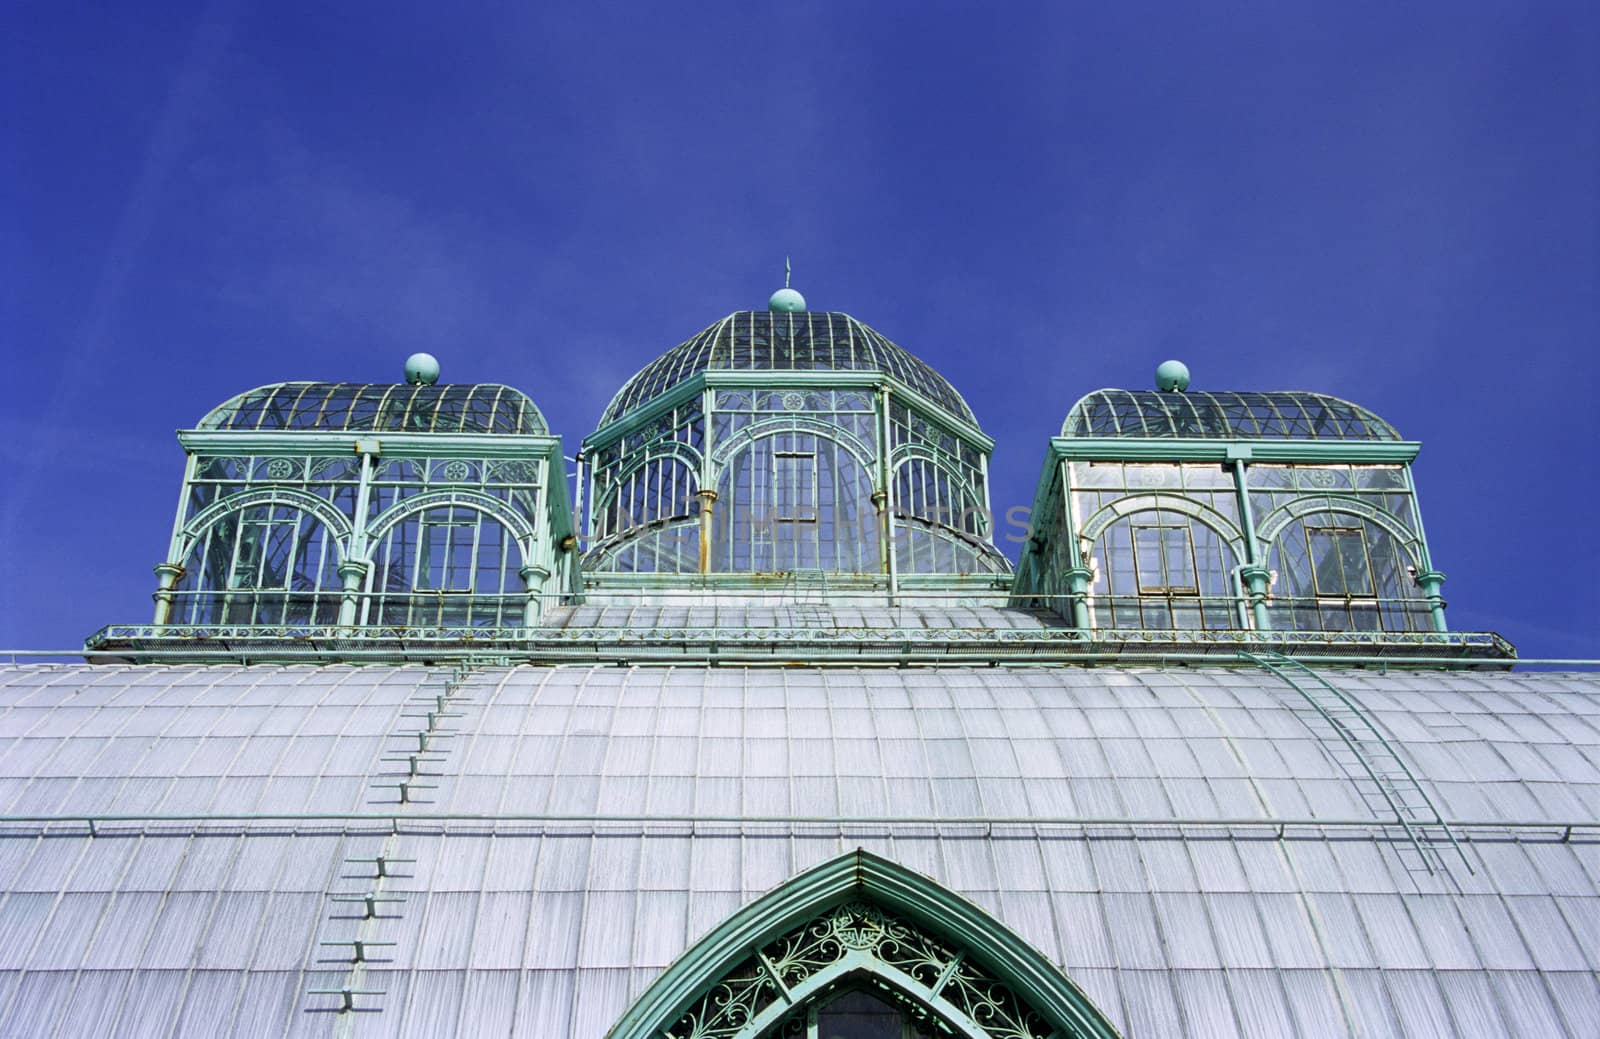 Ornate metal and glass roof of the Royal Gardens in Laeken, Belgium.